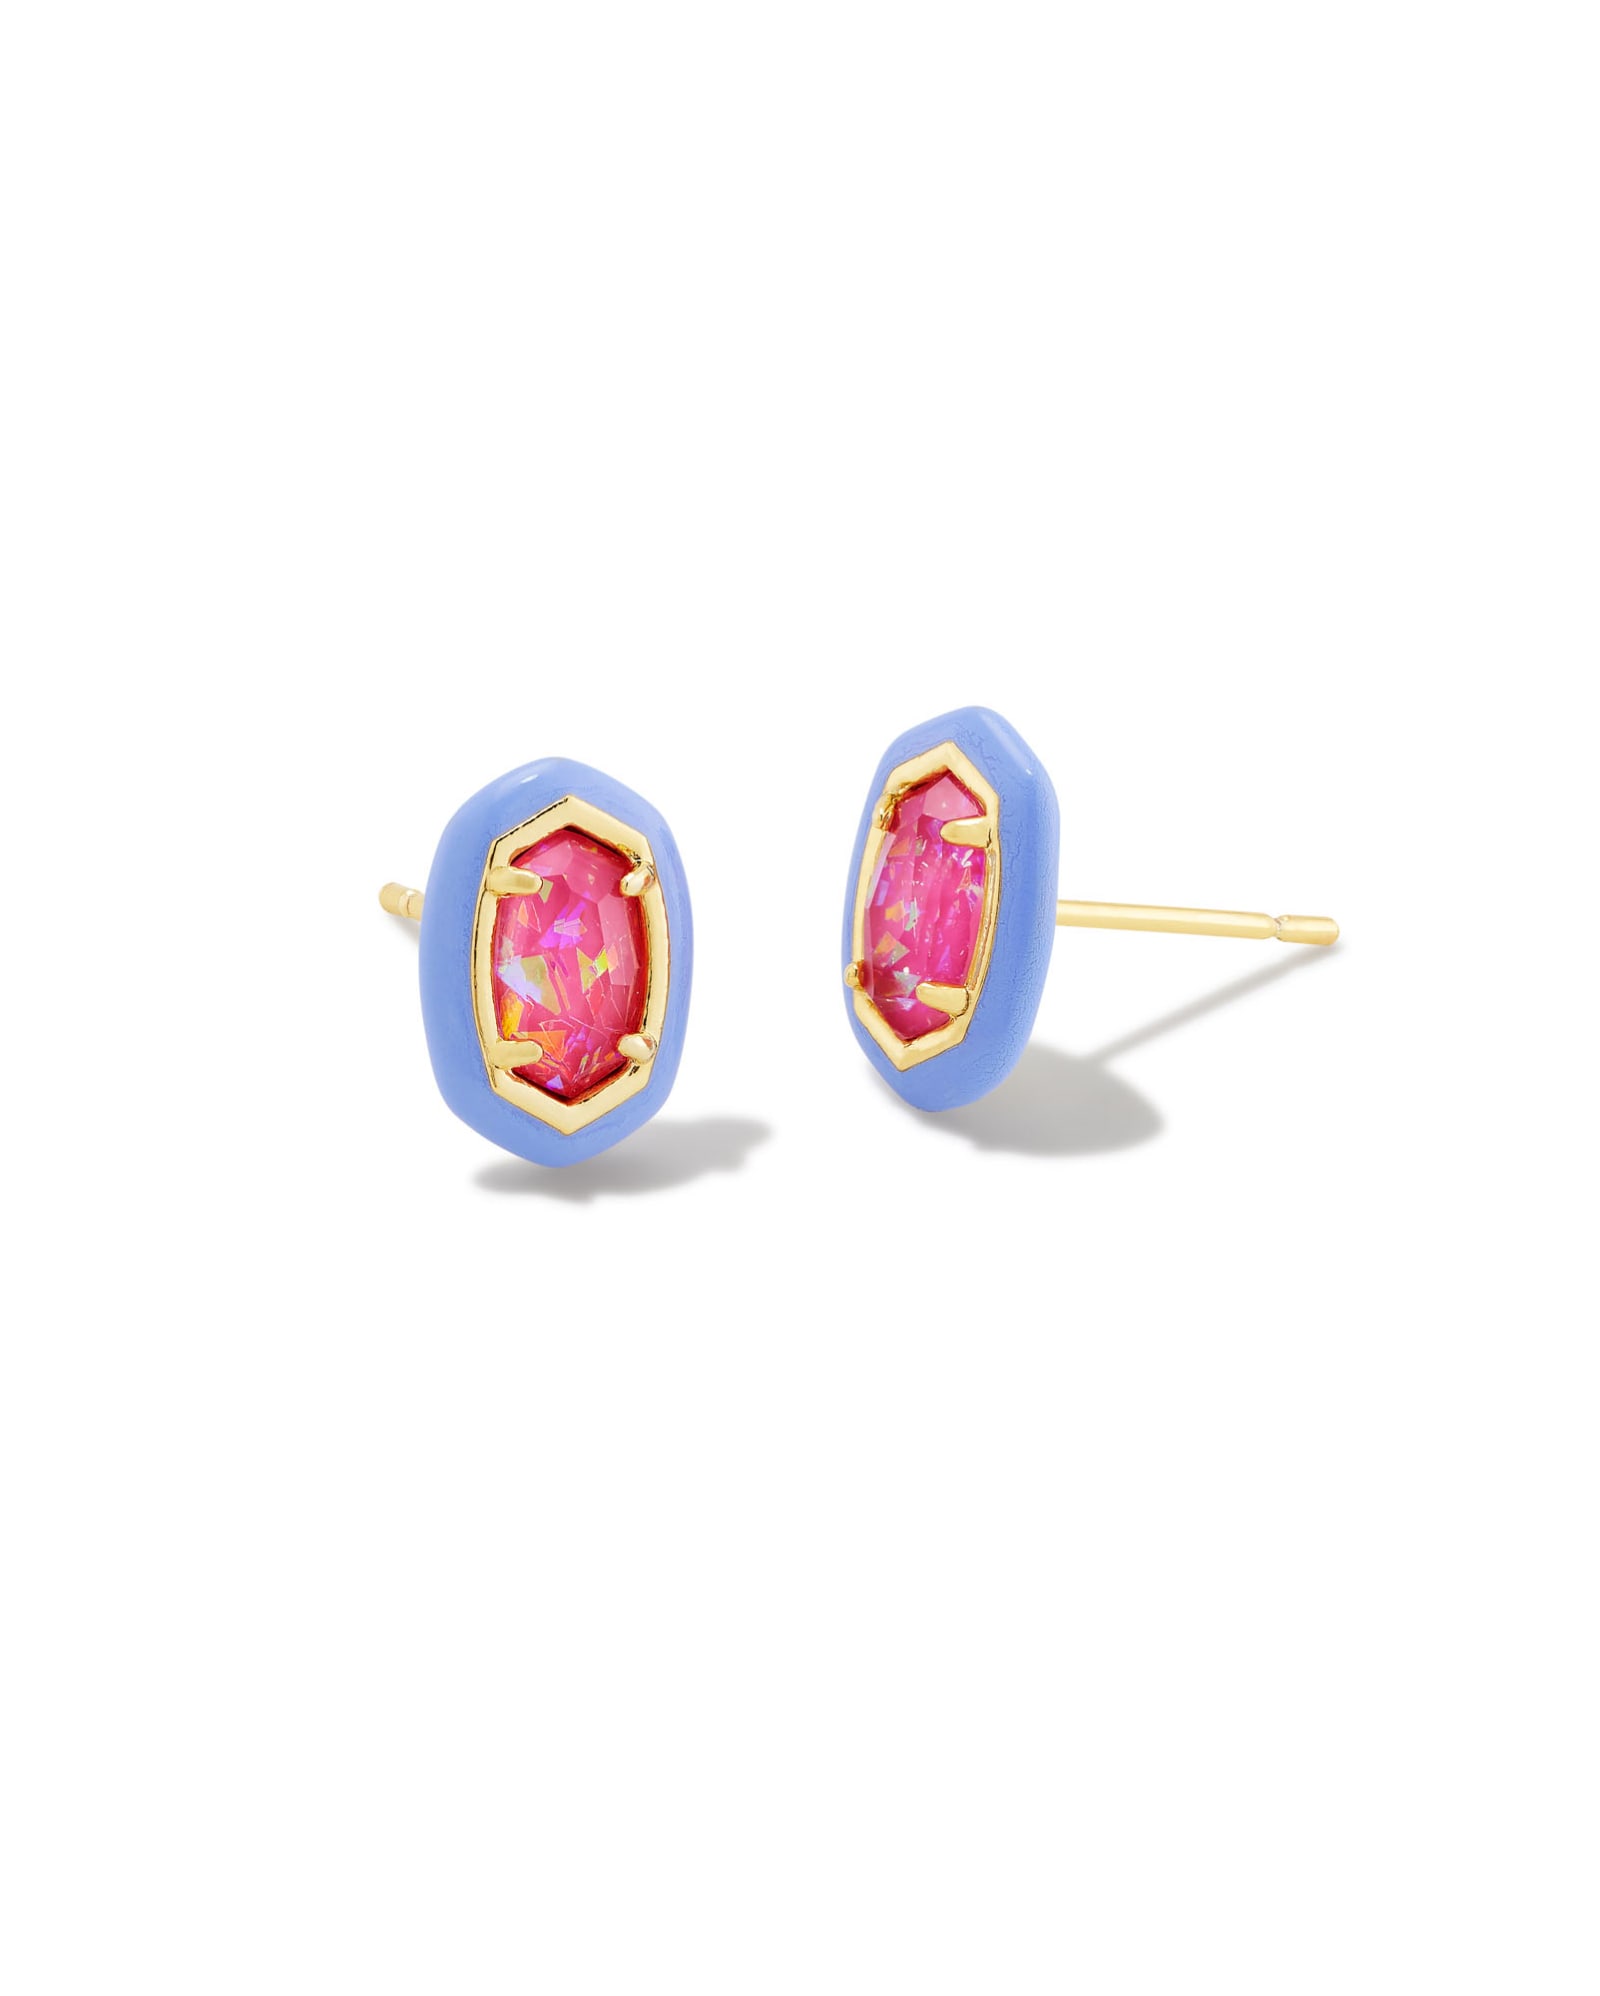 Kendra Scott Barbie x Gold Emilie Stud Earrings in Pink Iridescent Glitter Glass | Glass/Imitation Opal